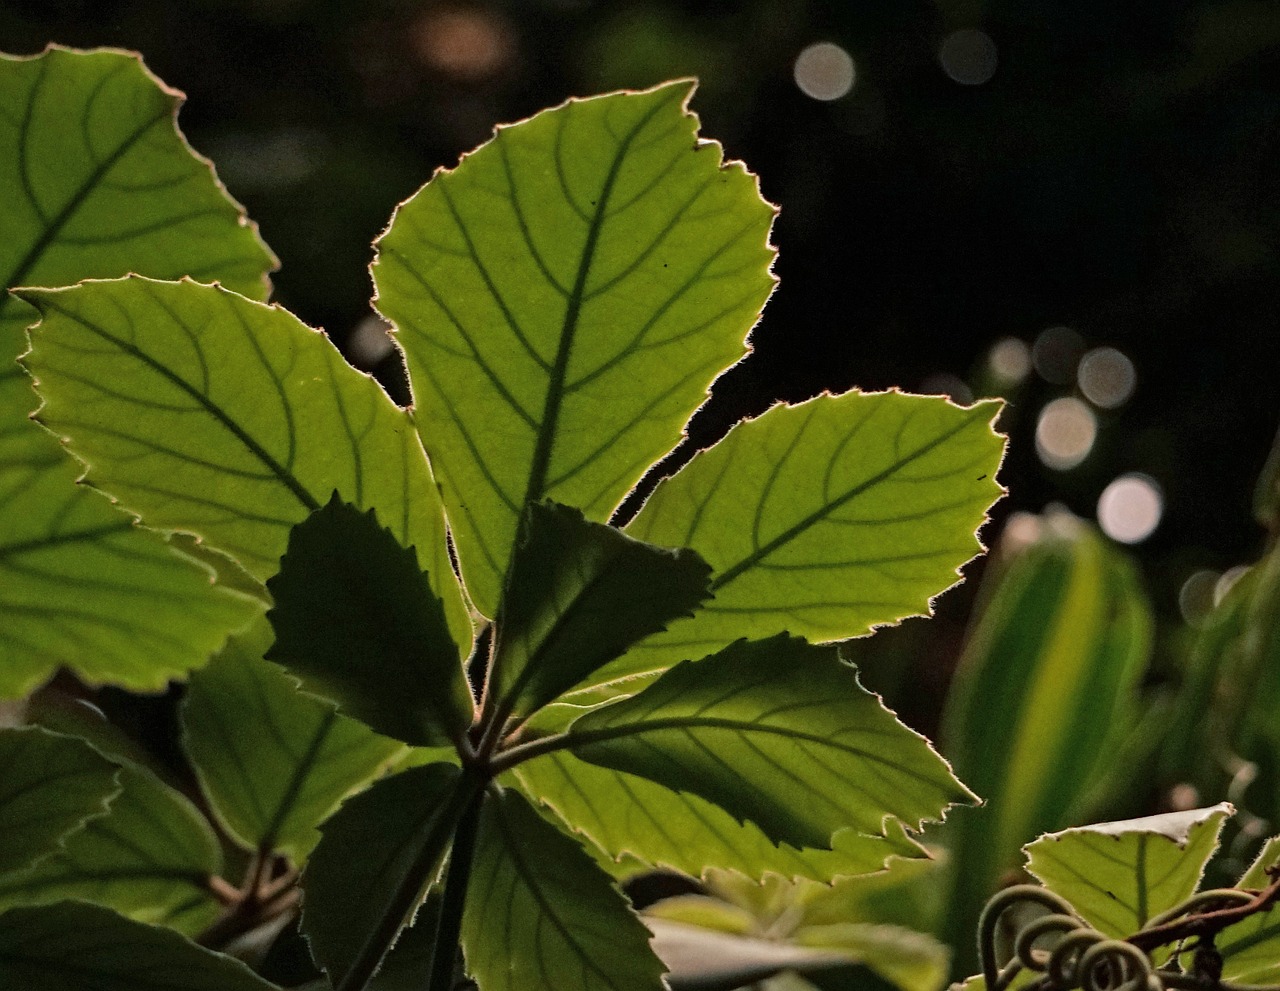 Leaves on the back. Зеленые растения с закрытой. Leaf back. Фото листья с подсветкой.